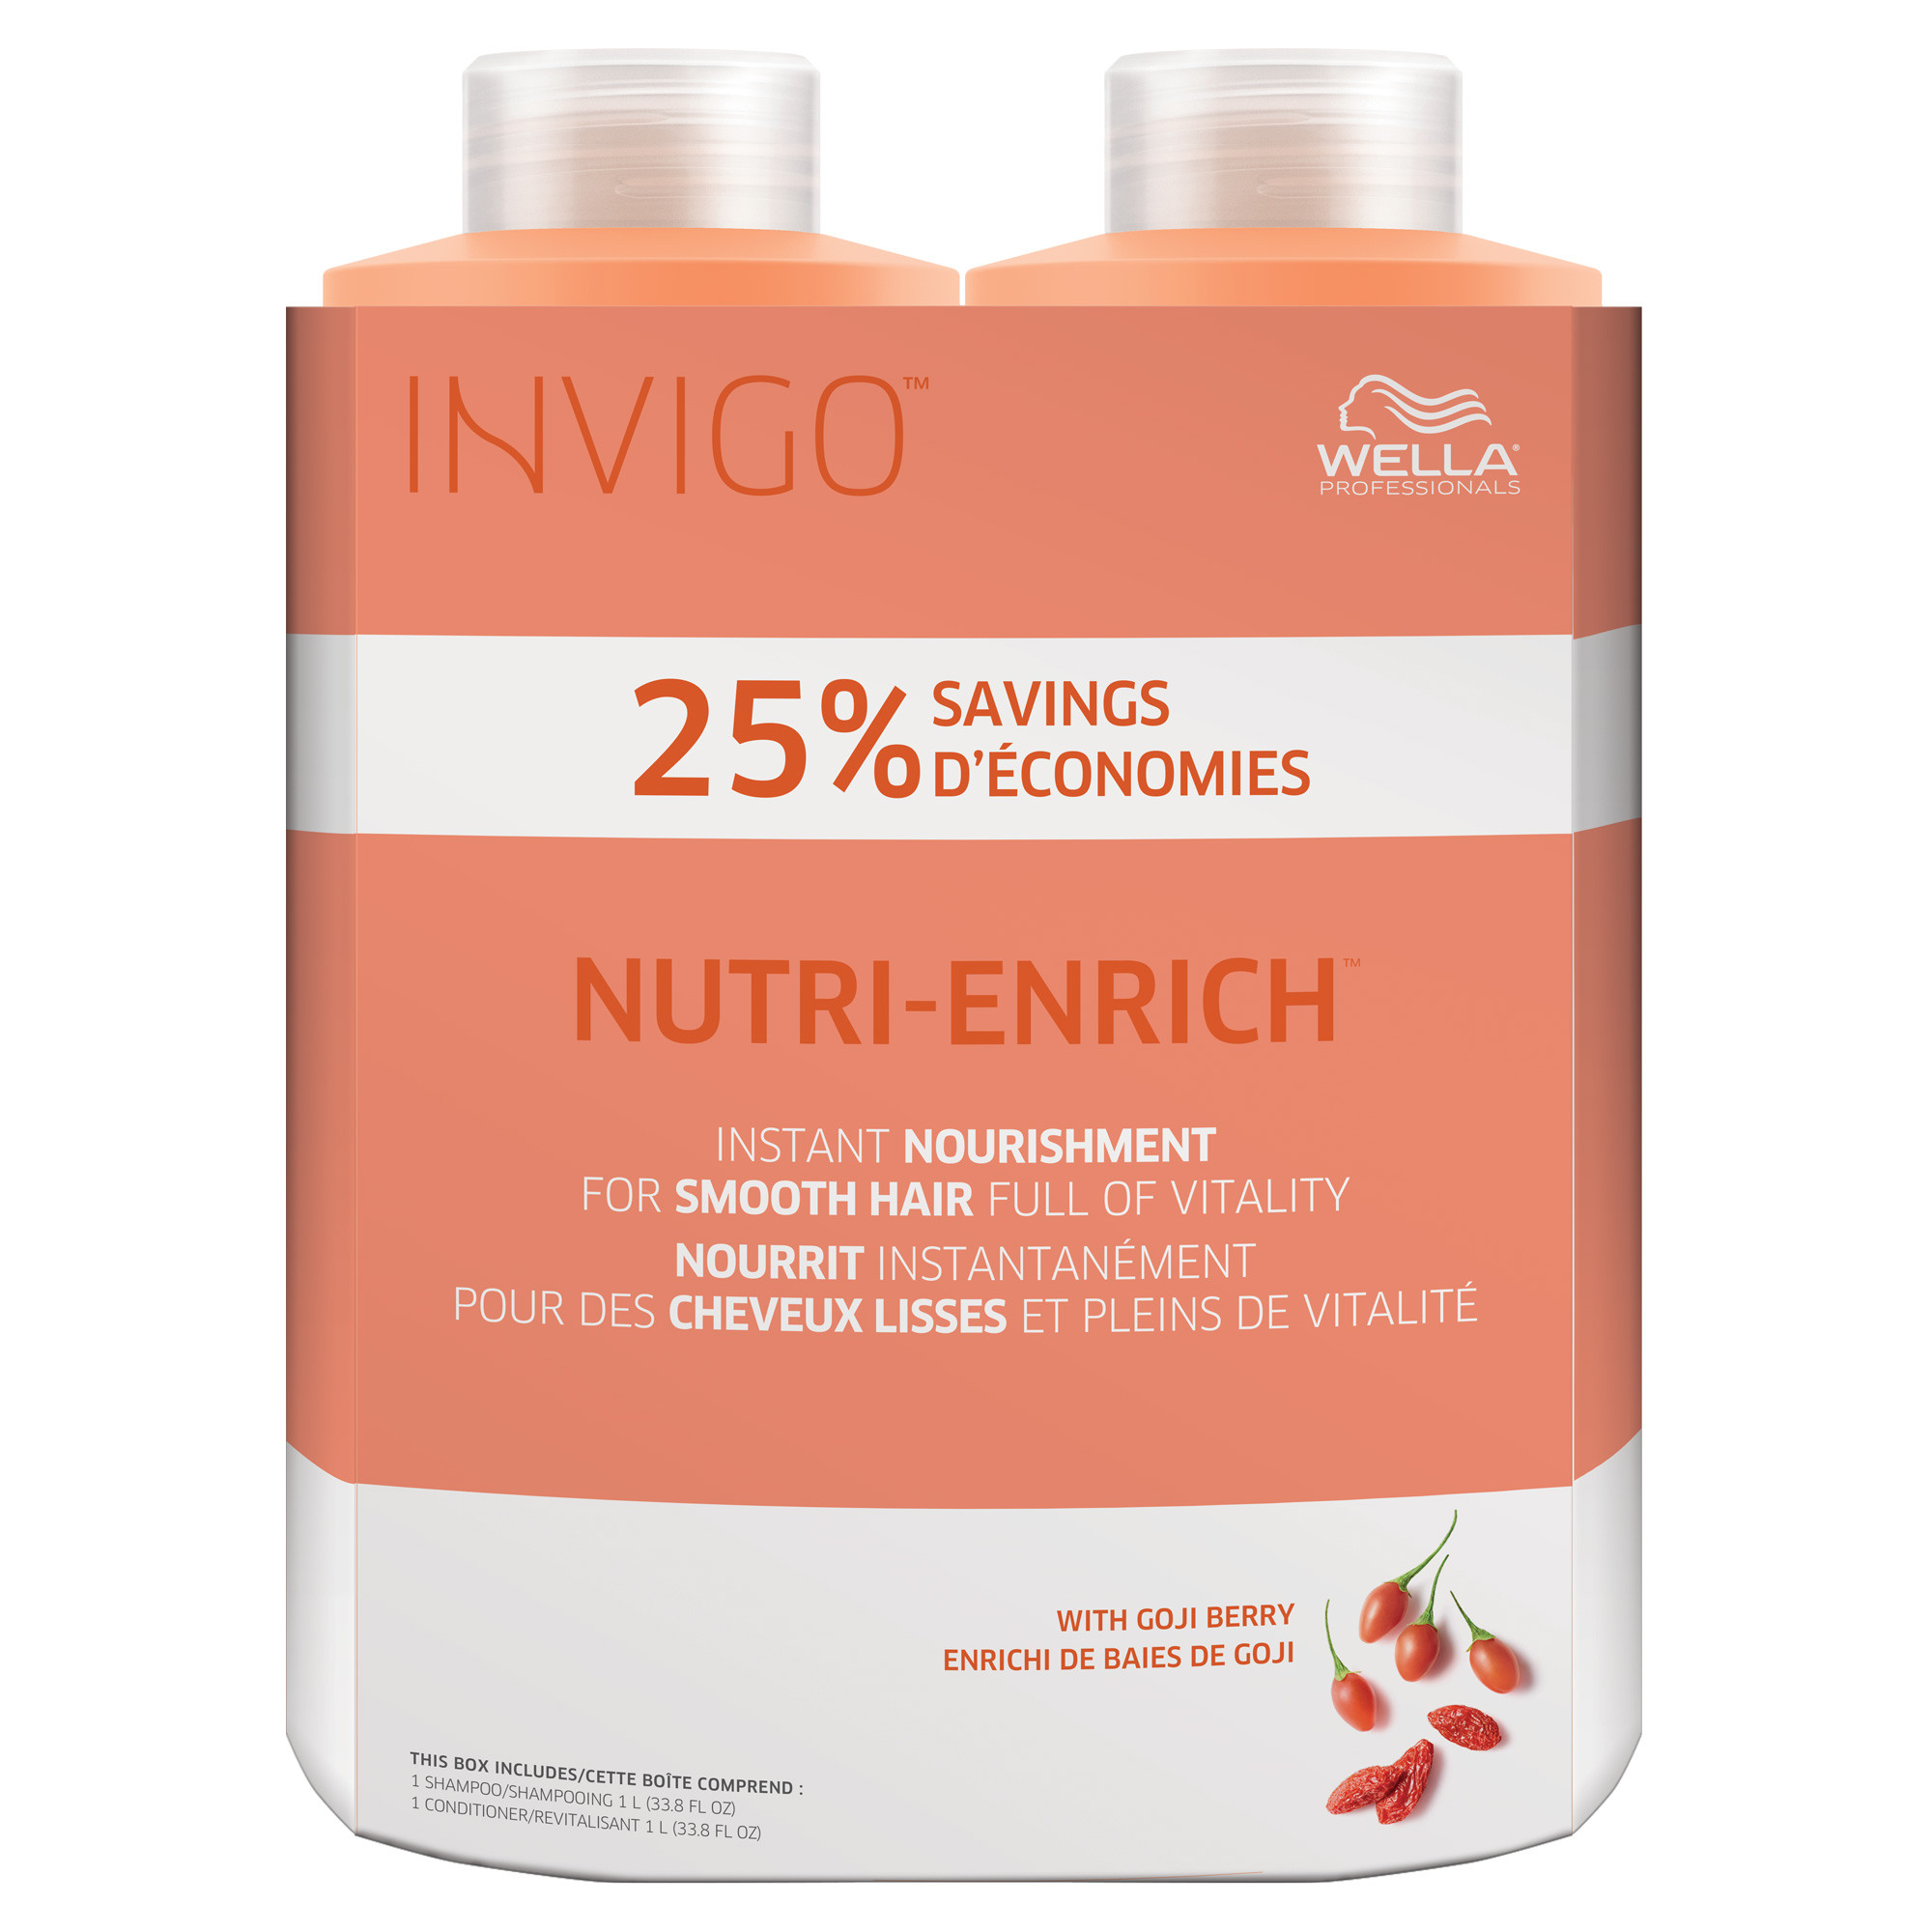 Invigo Nutri-Enrich Nourishing Anti-Static Spray